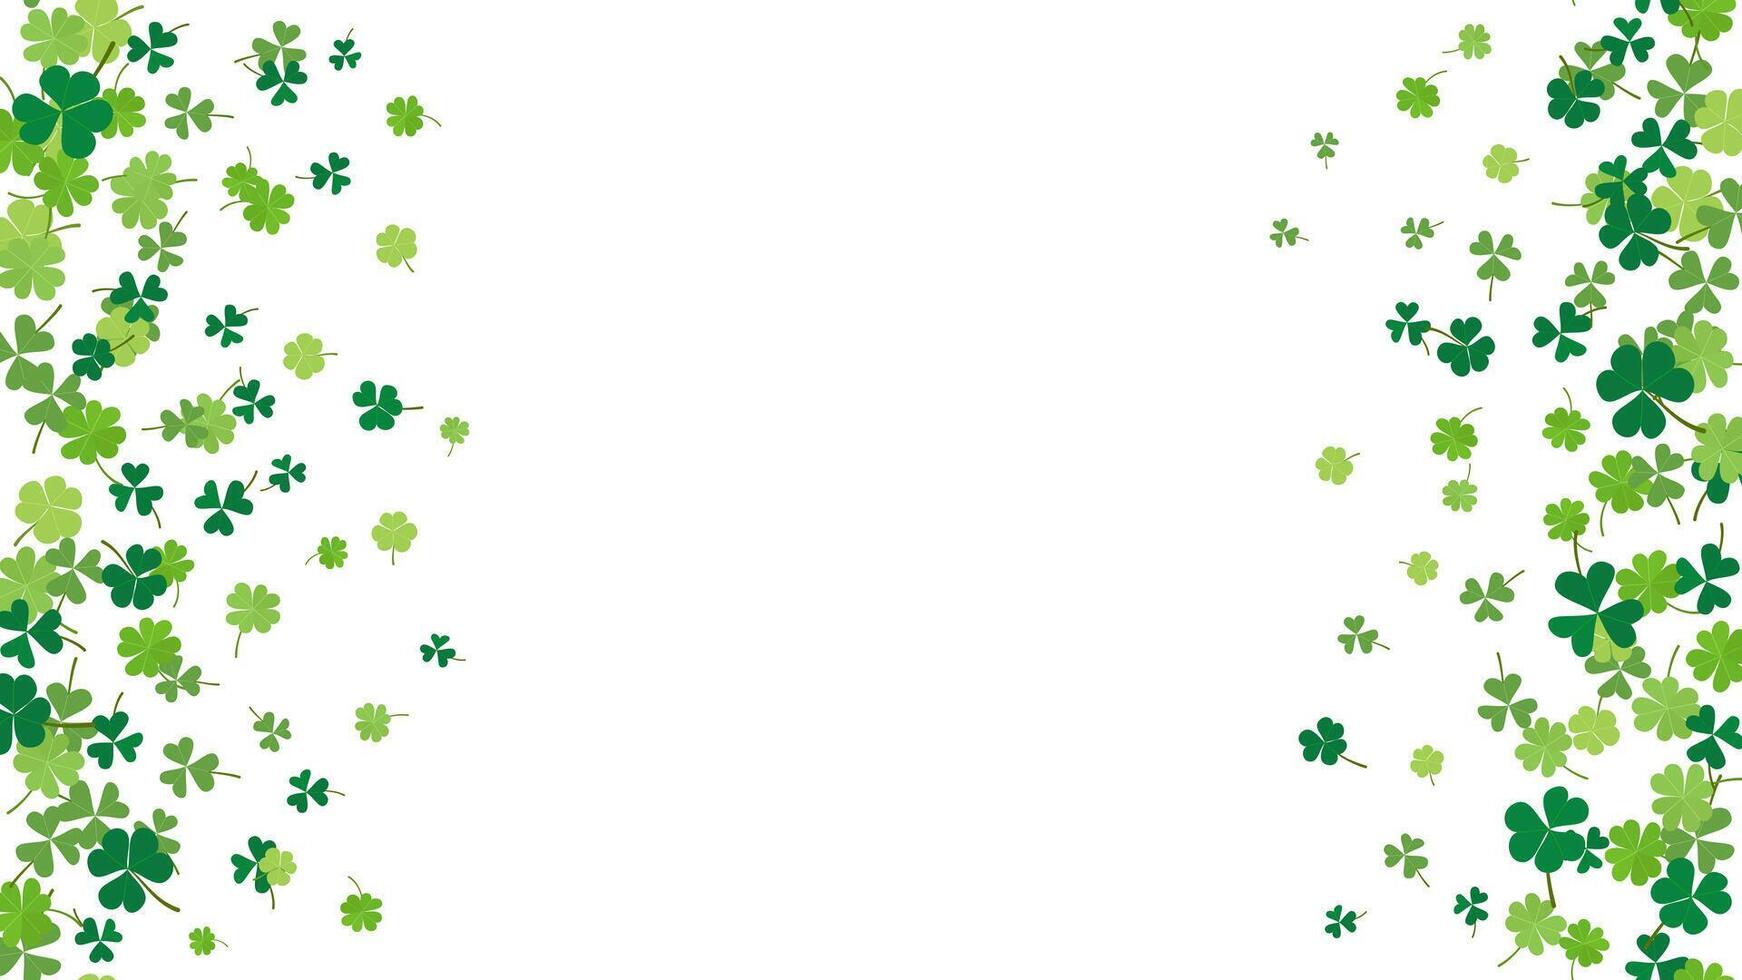 Frame shamrock or clover leaves flat design green backdrop vector illustration isolated for St. Patrick Day